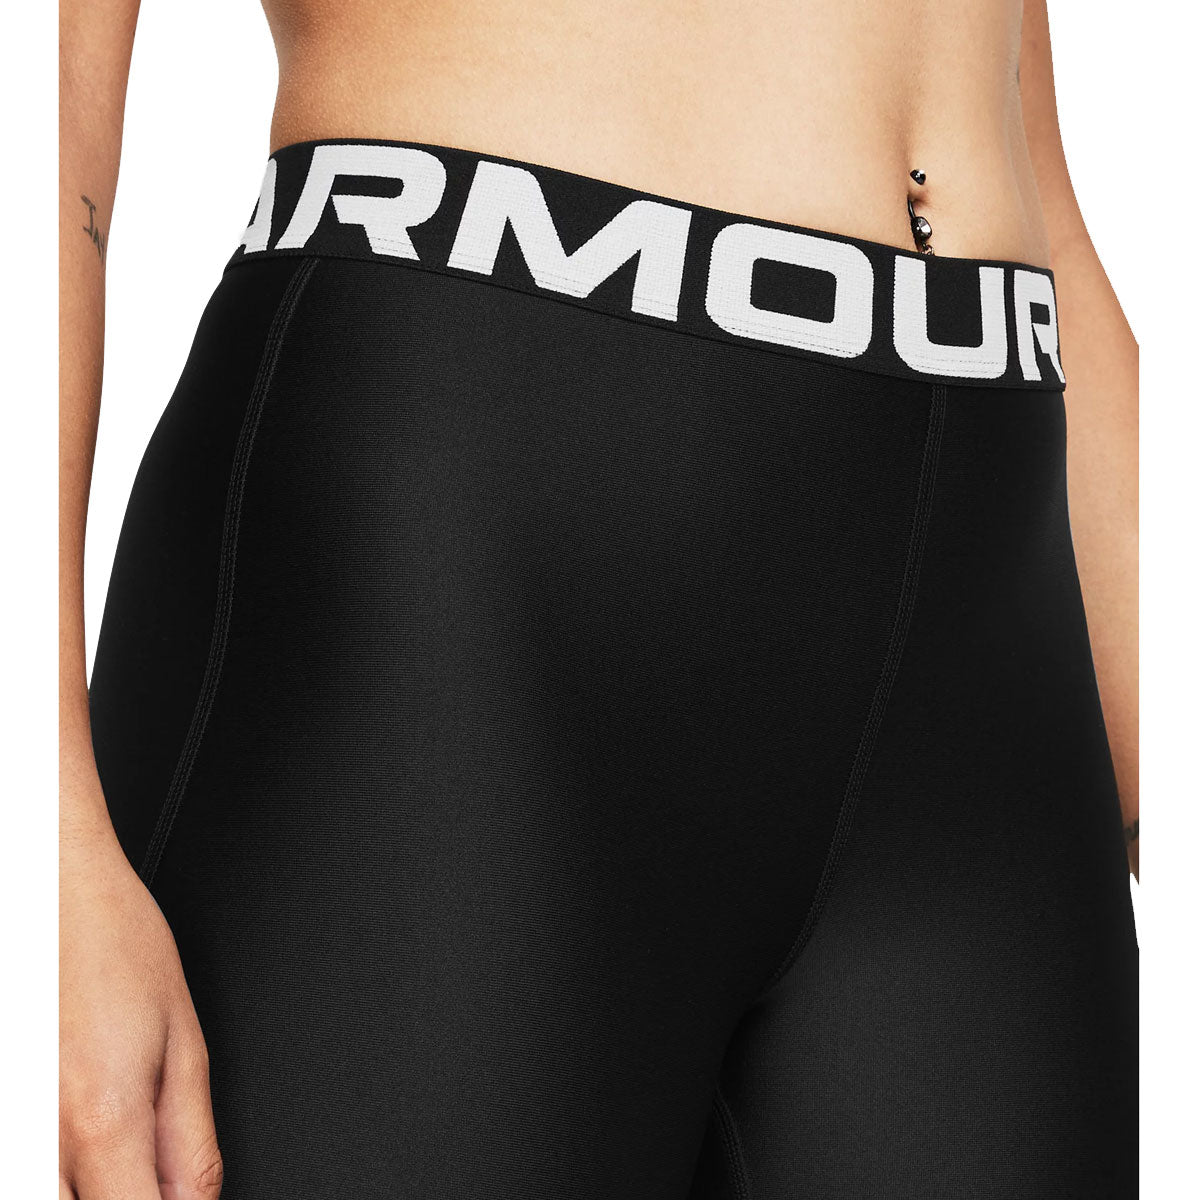 Under Armour Heatgear Authentics 8 inch Shorts - Womens - Black/White